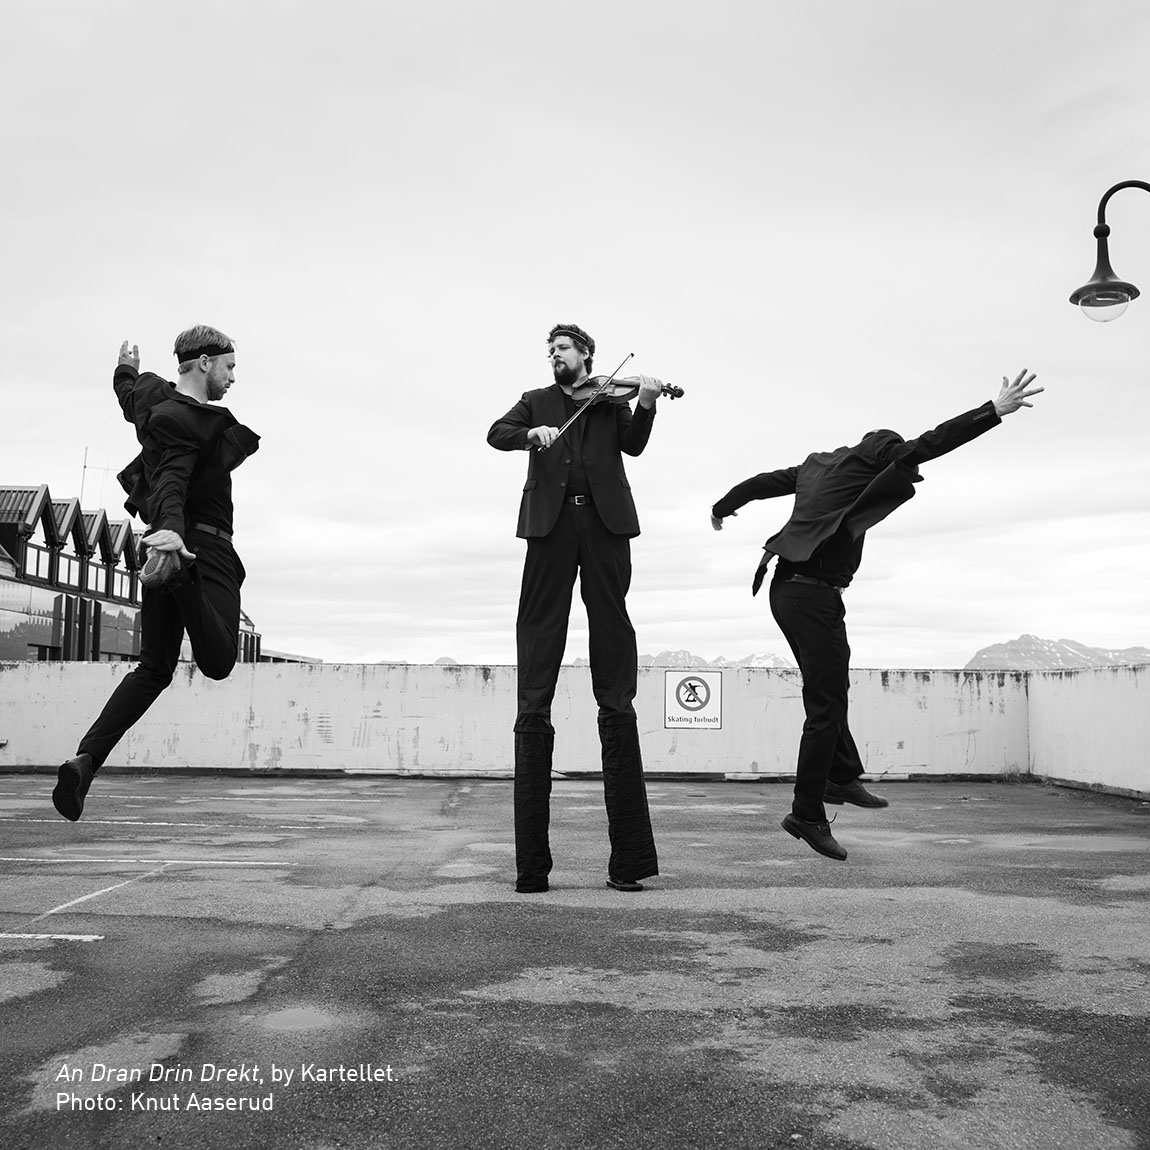 DanseFestival Barents: World-class dance experiences in an Arctic setting